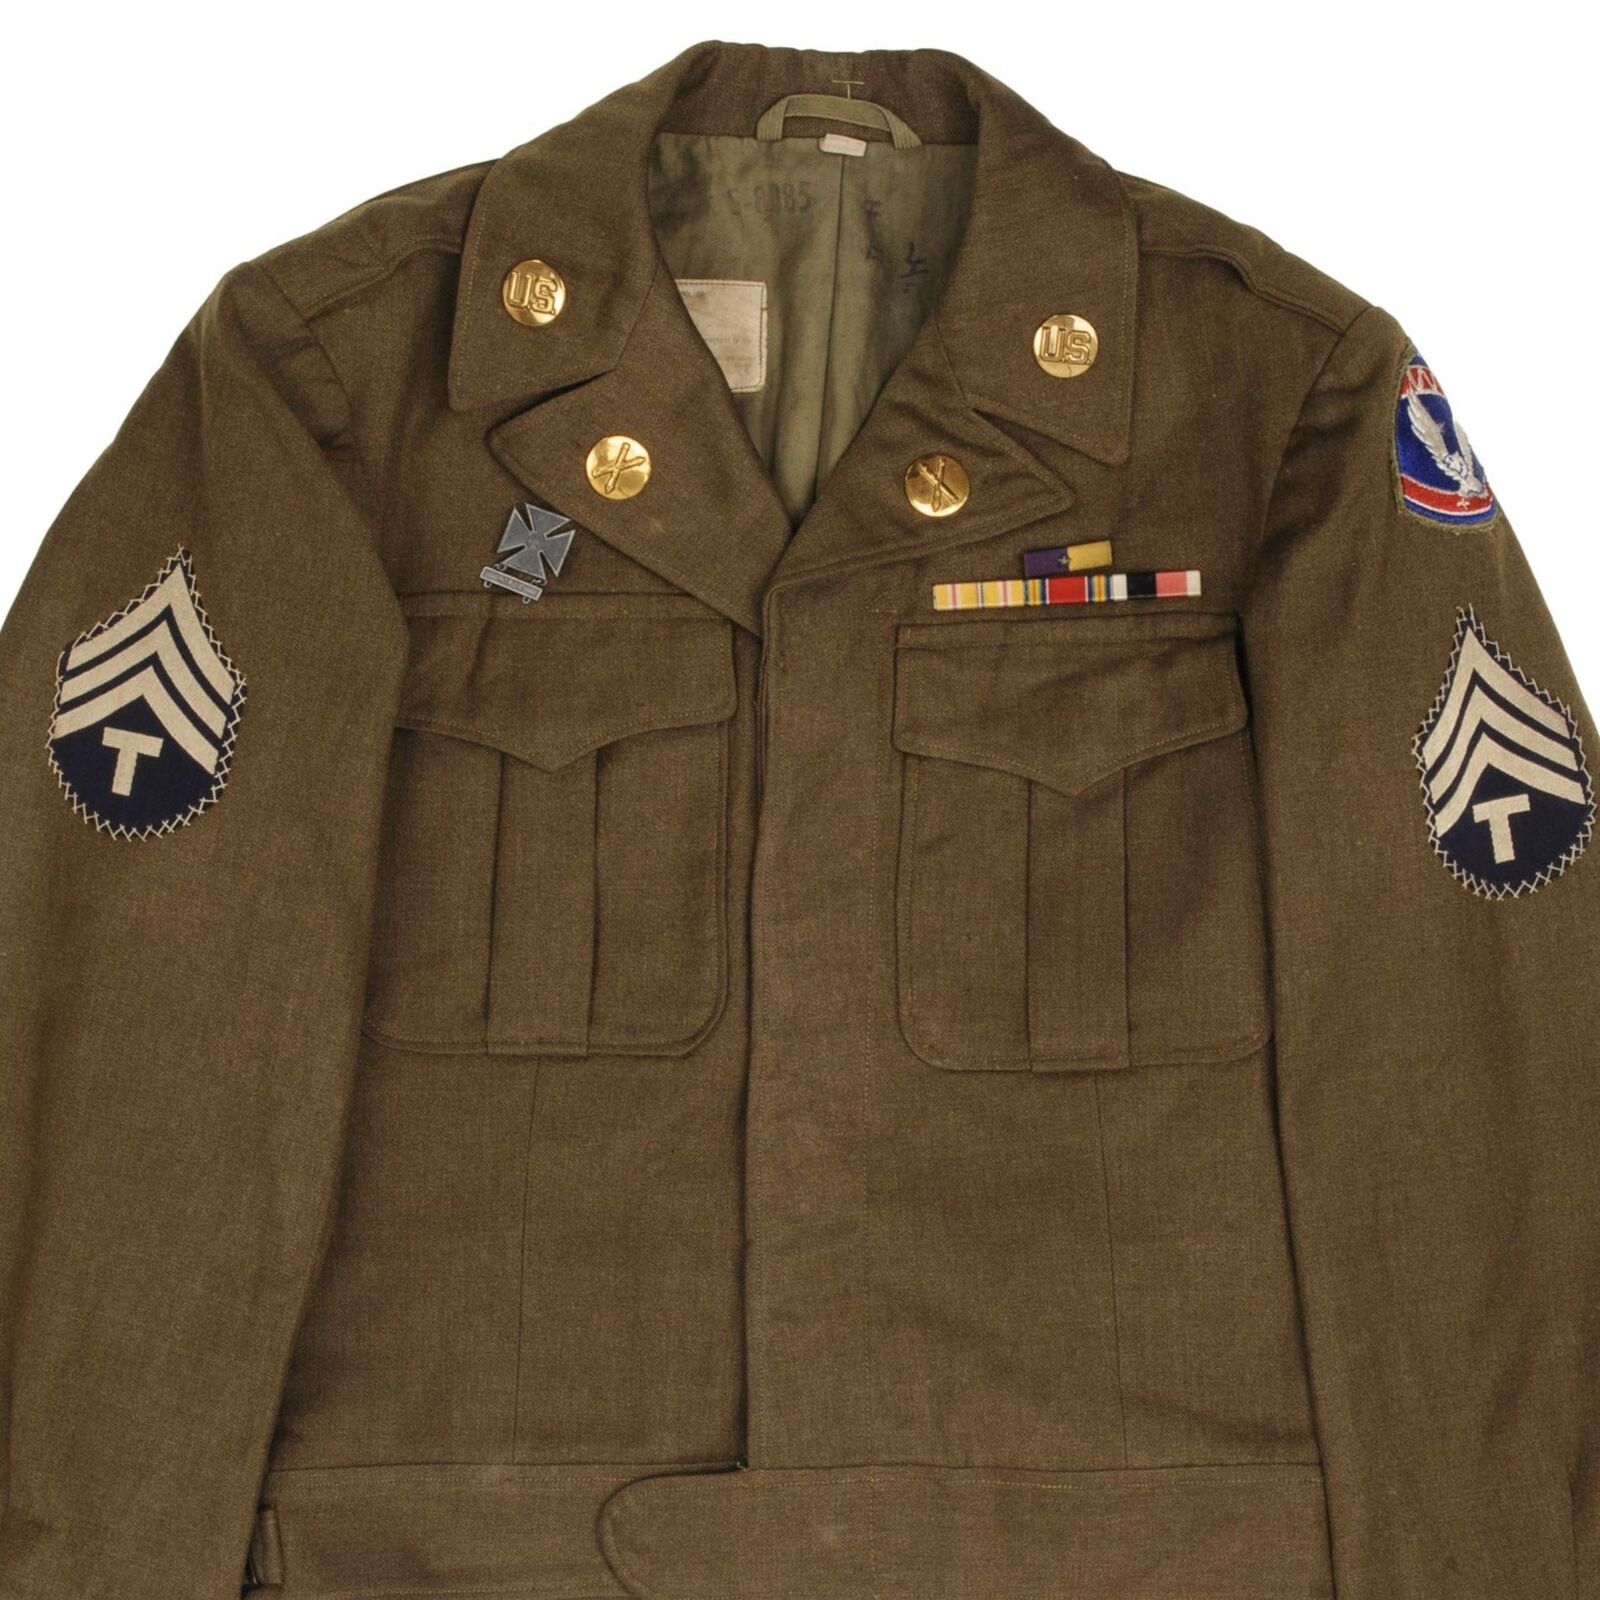 VINTAGE US ARMY AIRBORNE POST WW2 OFFICER DRESS IKE JACKET SIZE 34R 1940S